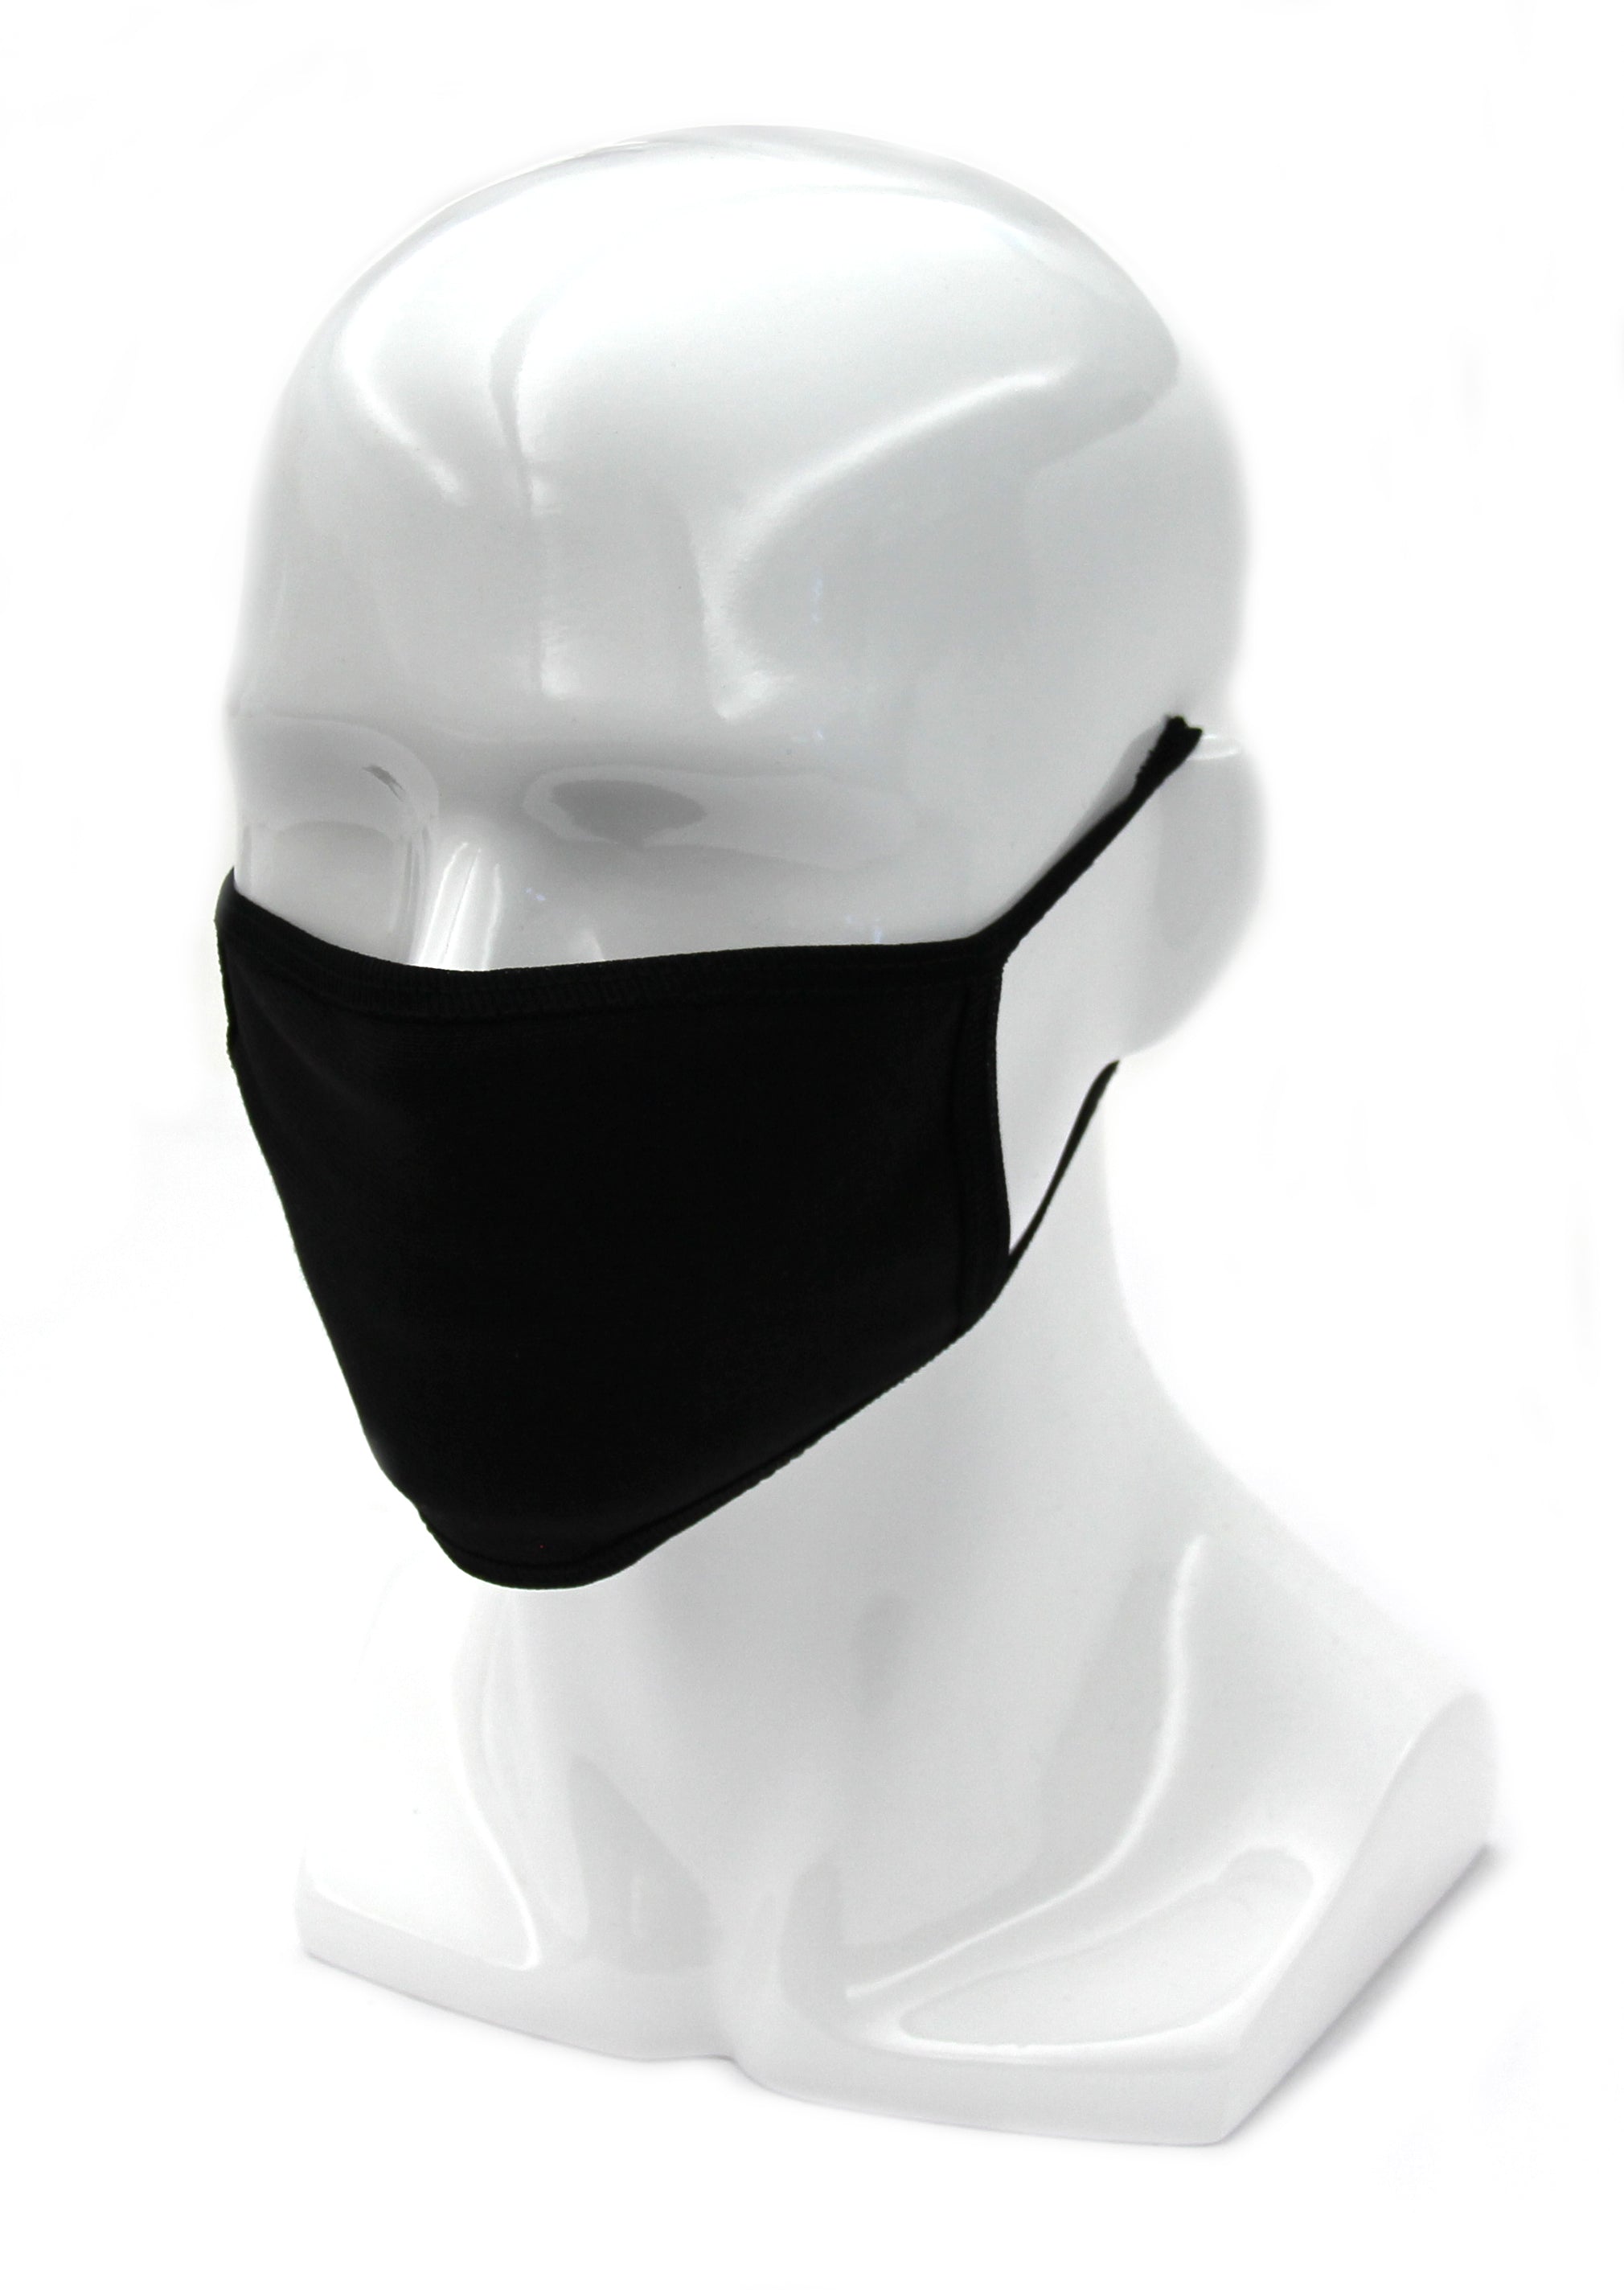 Cotton Face Masks Reusable and Washable - Black Non-Medical